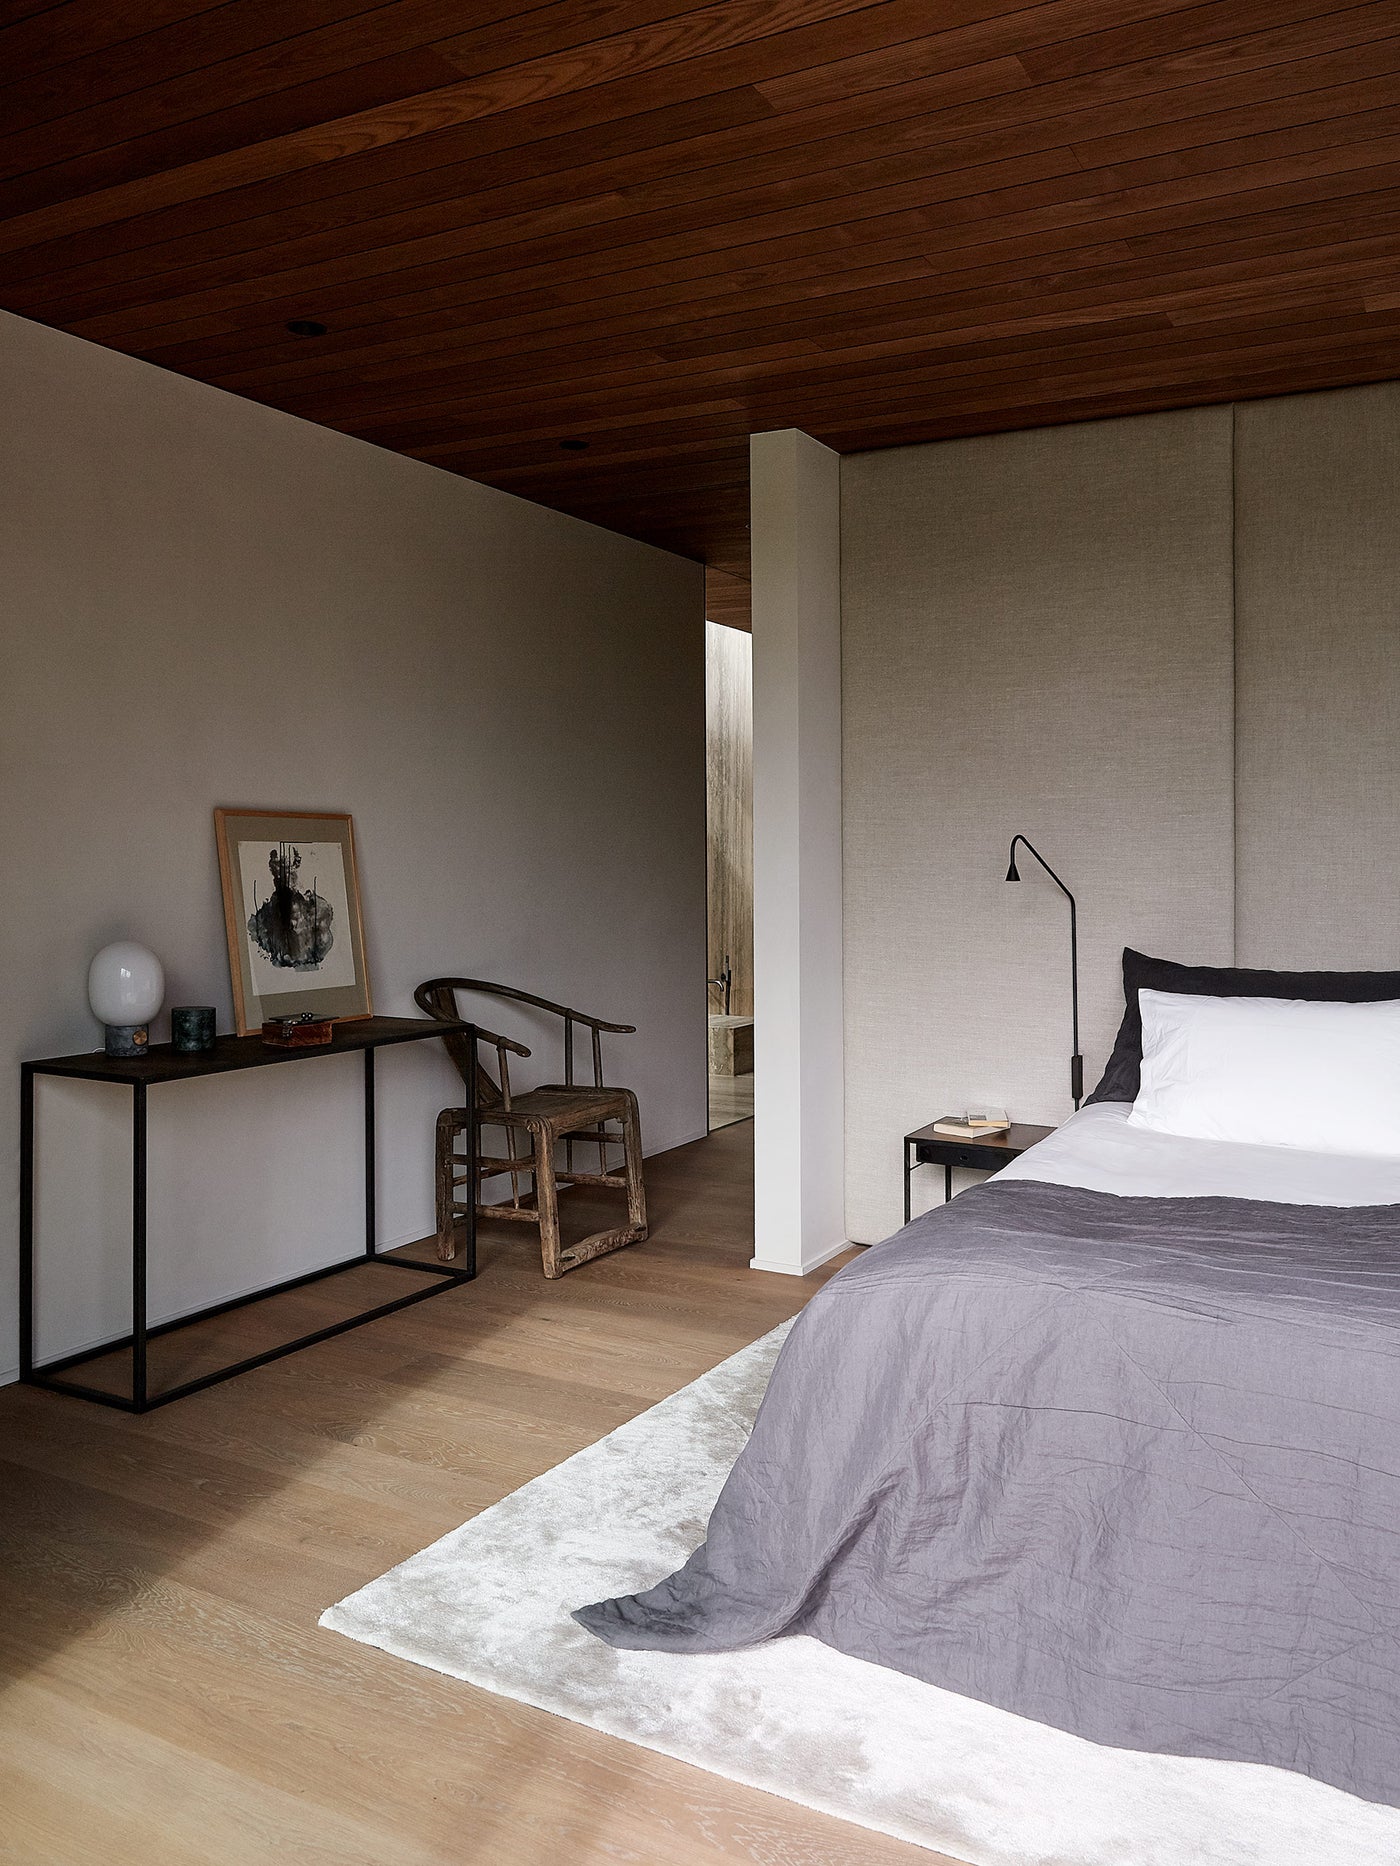 Bedroom - Artempo Interior Architecture Design - Kasia Gatkowska for ELLE